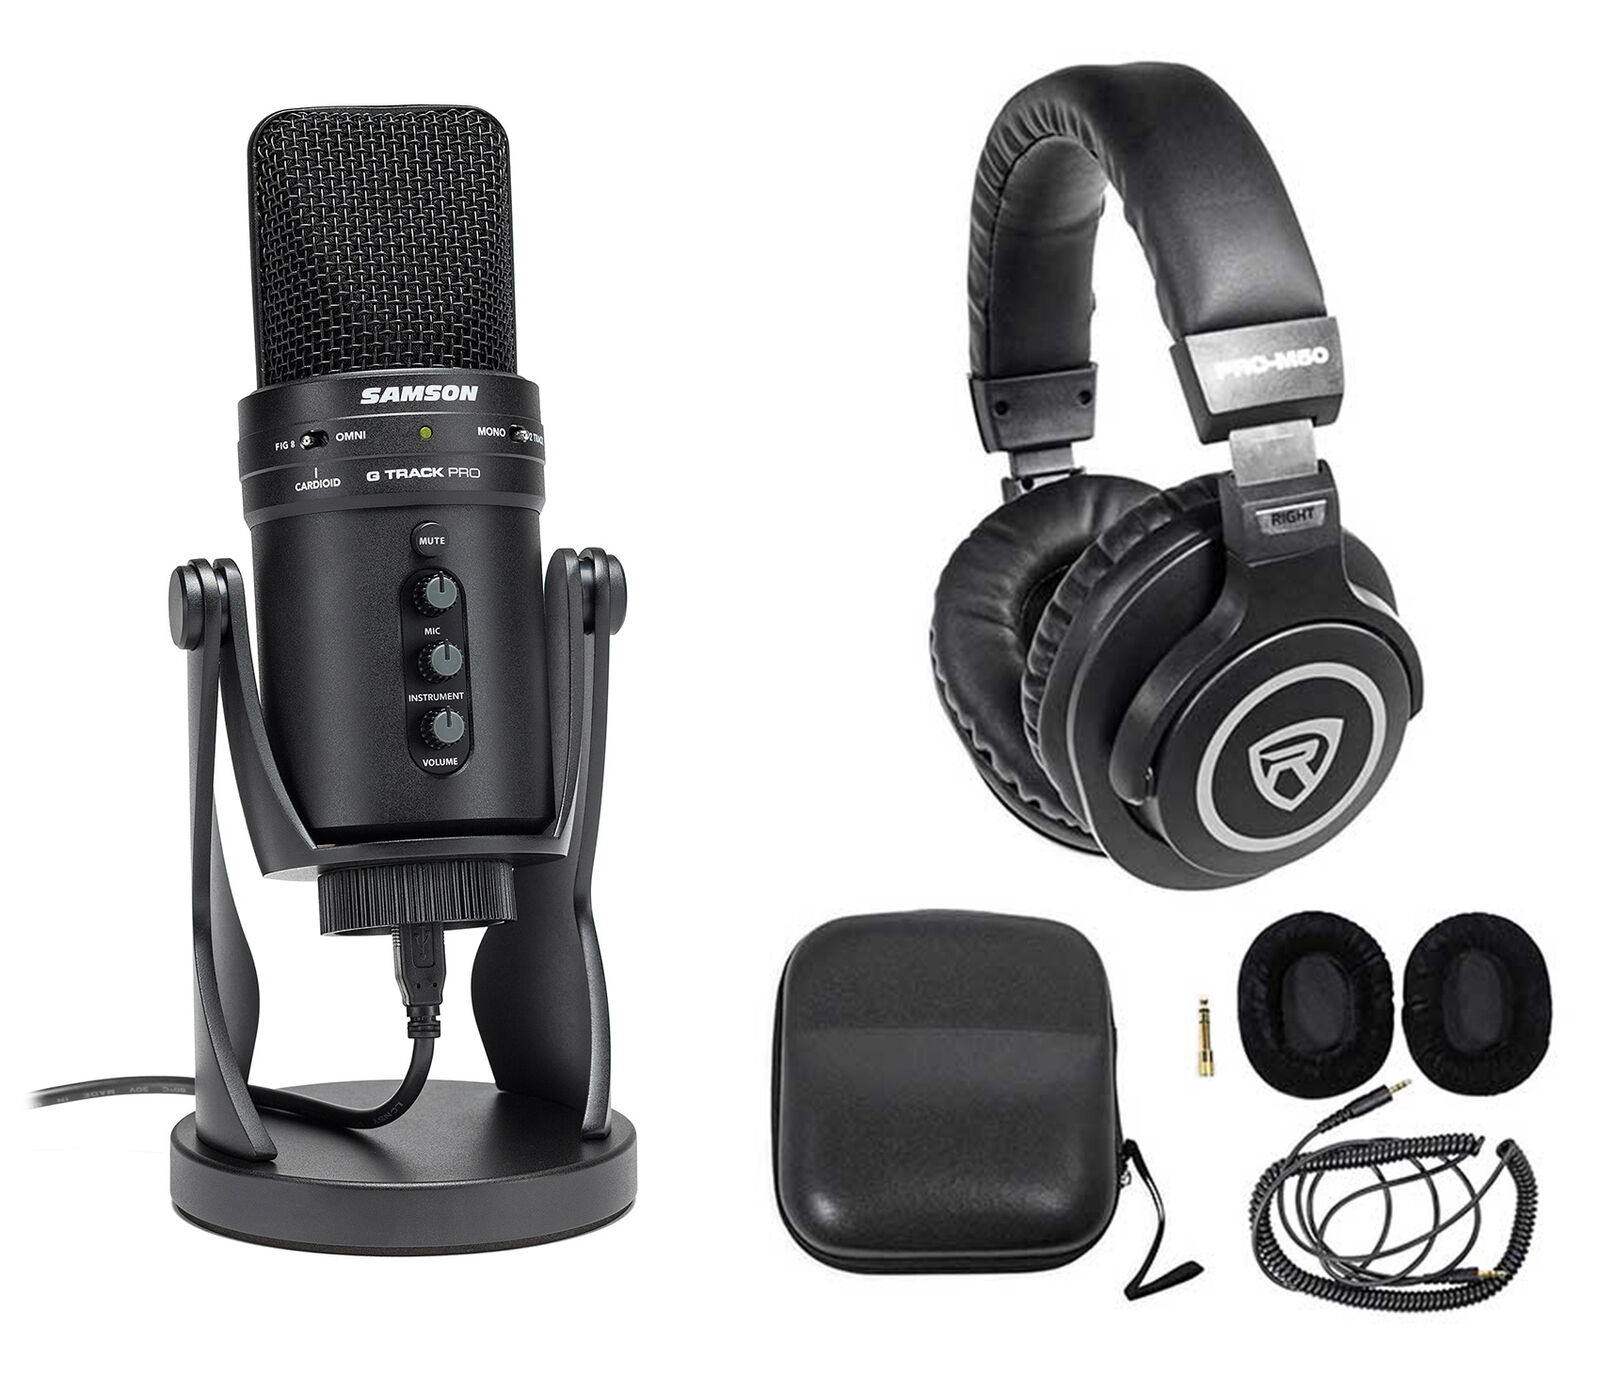 SAMSON G-Track Pro Studio USB Podcast Microphone Mic+Interface+Headphones